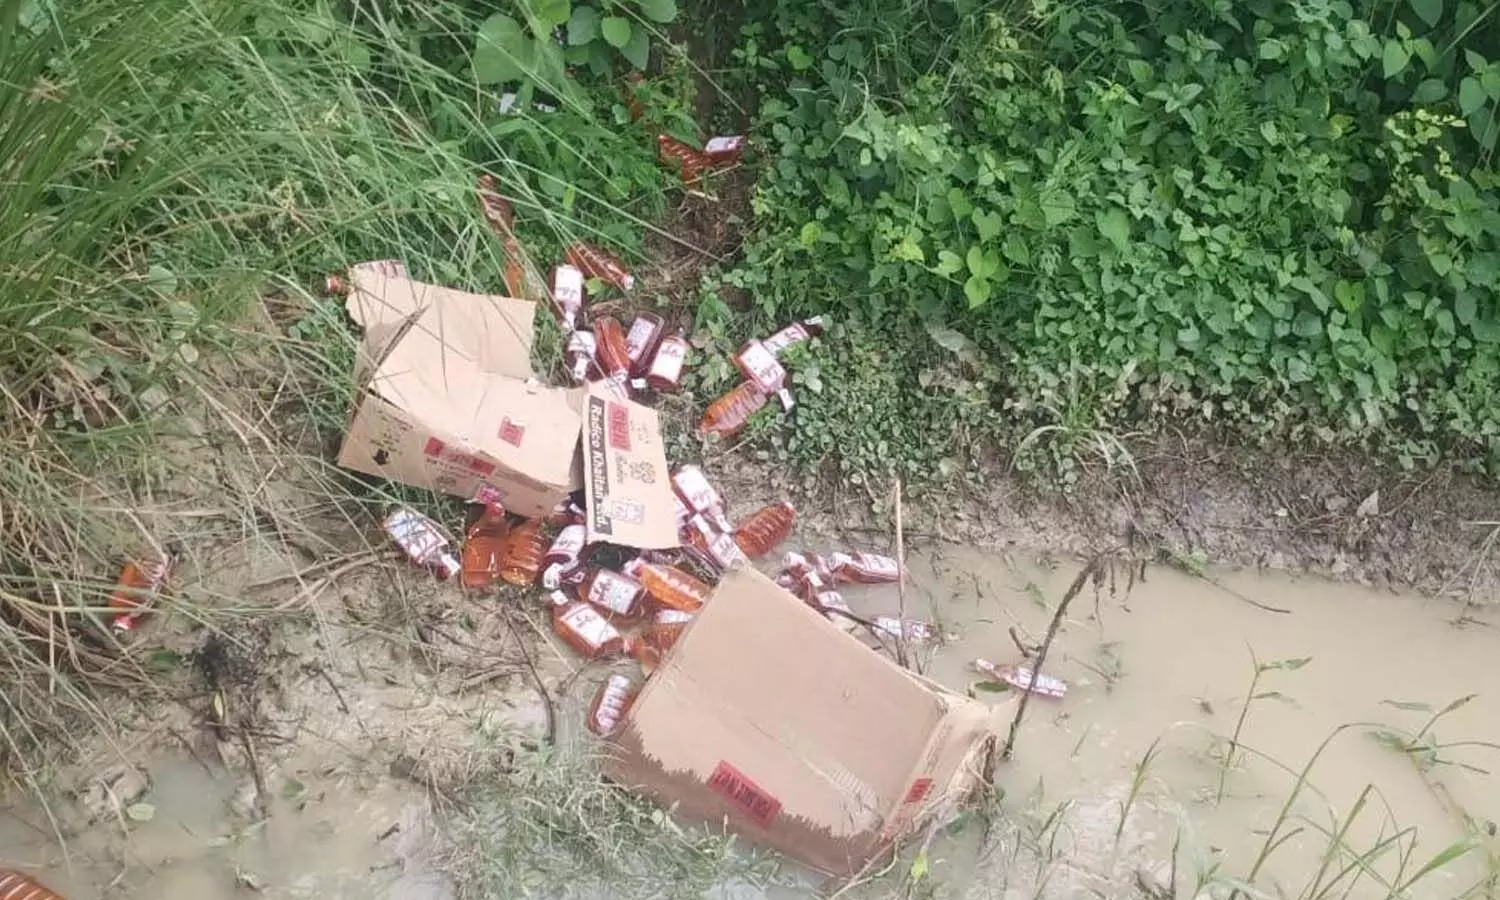 Four sacks of liquor bottles found in Chandrawal village of police station Sarojini Nagar